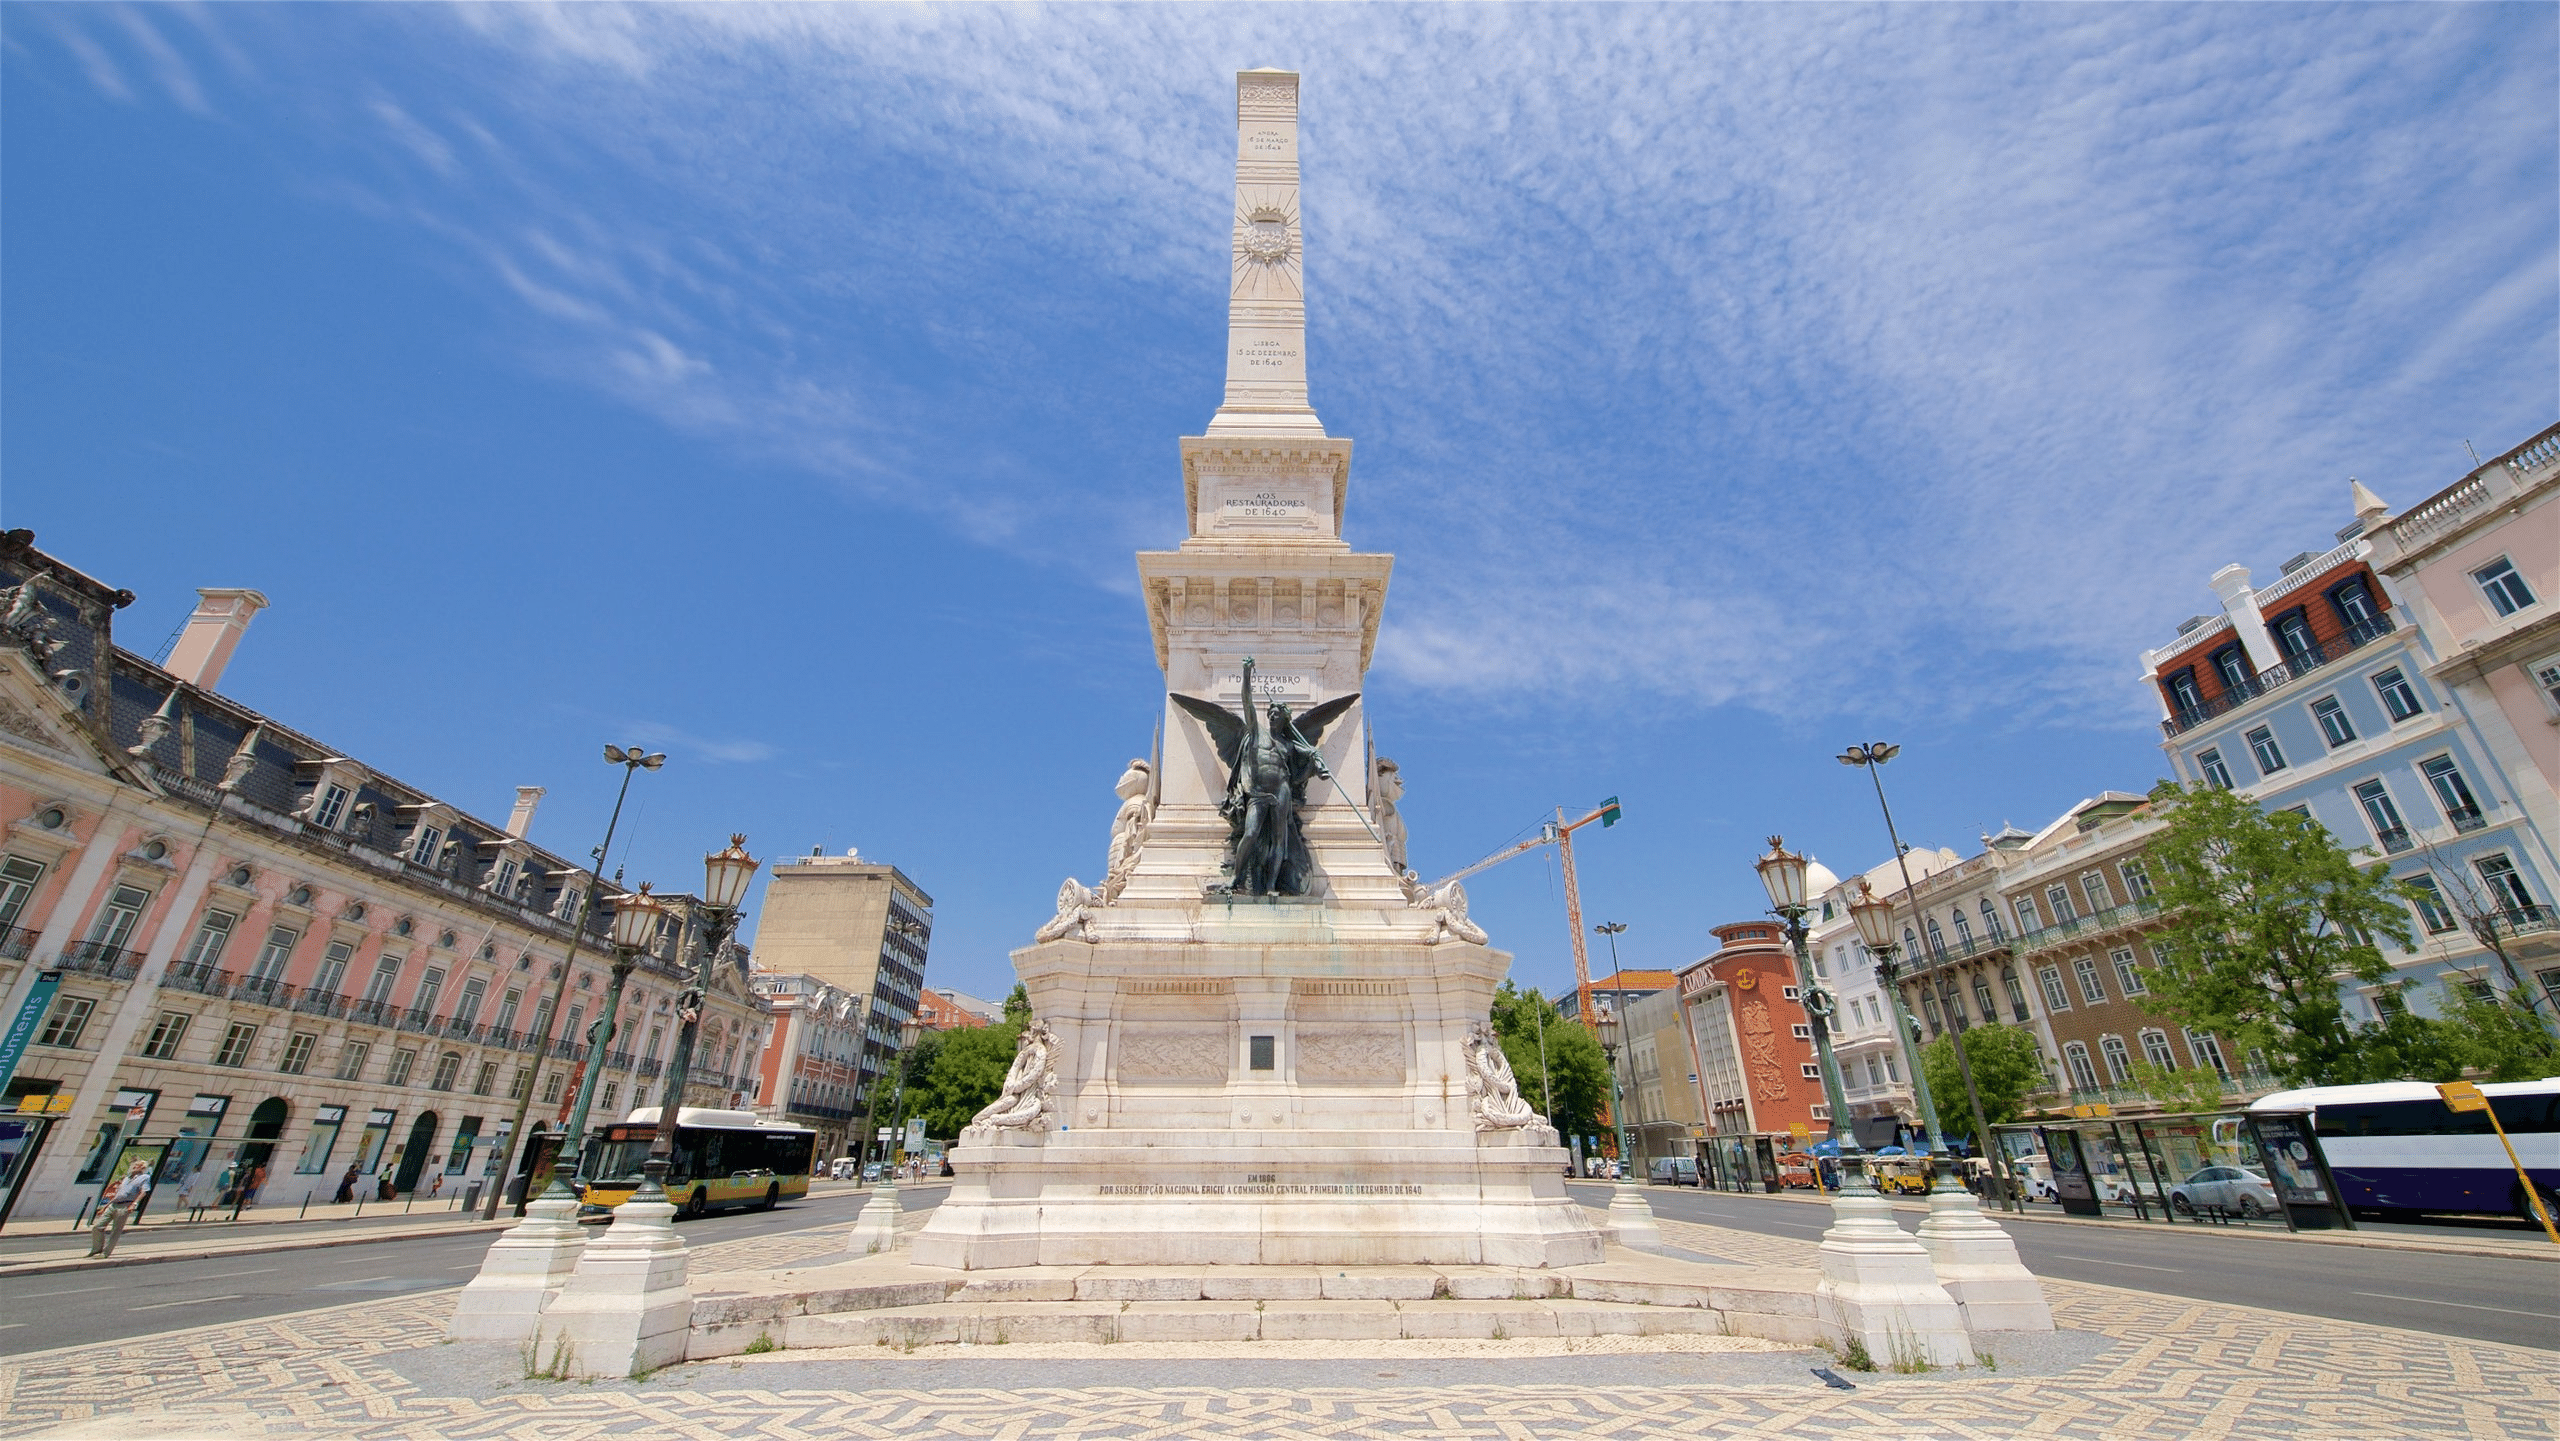 Admire the Architecture of the Obelisk